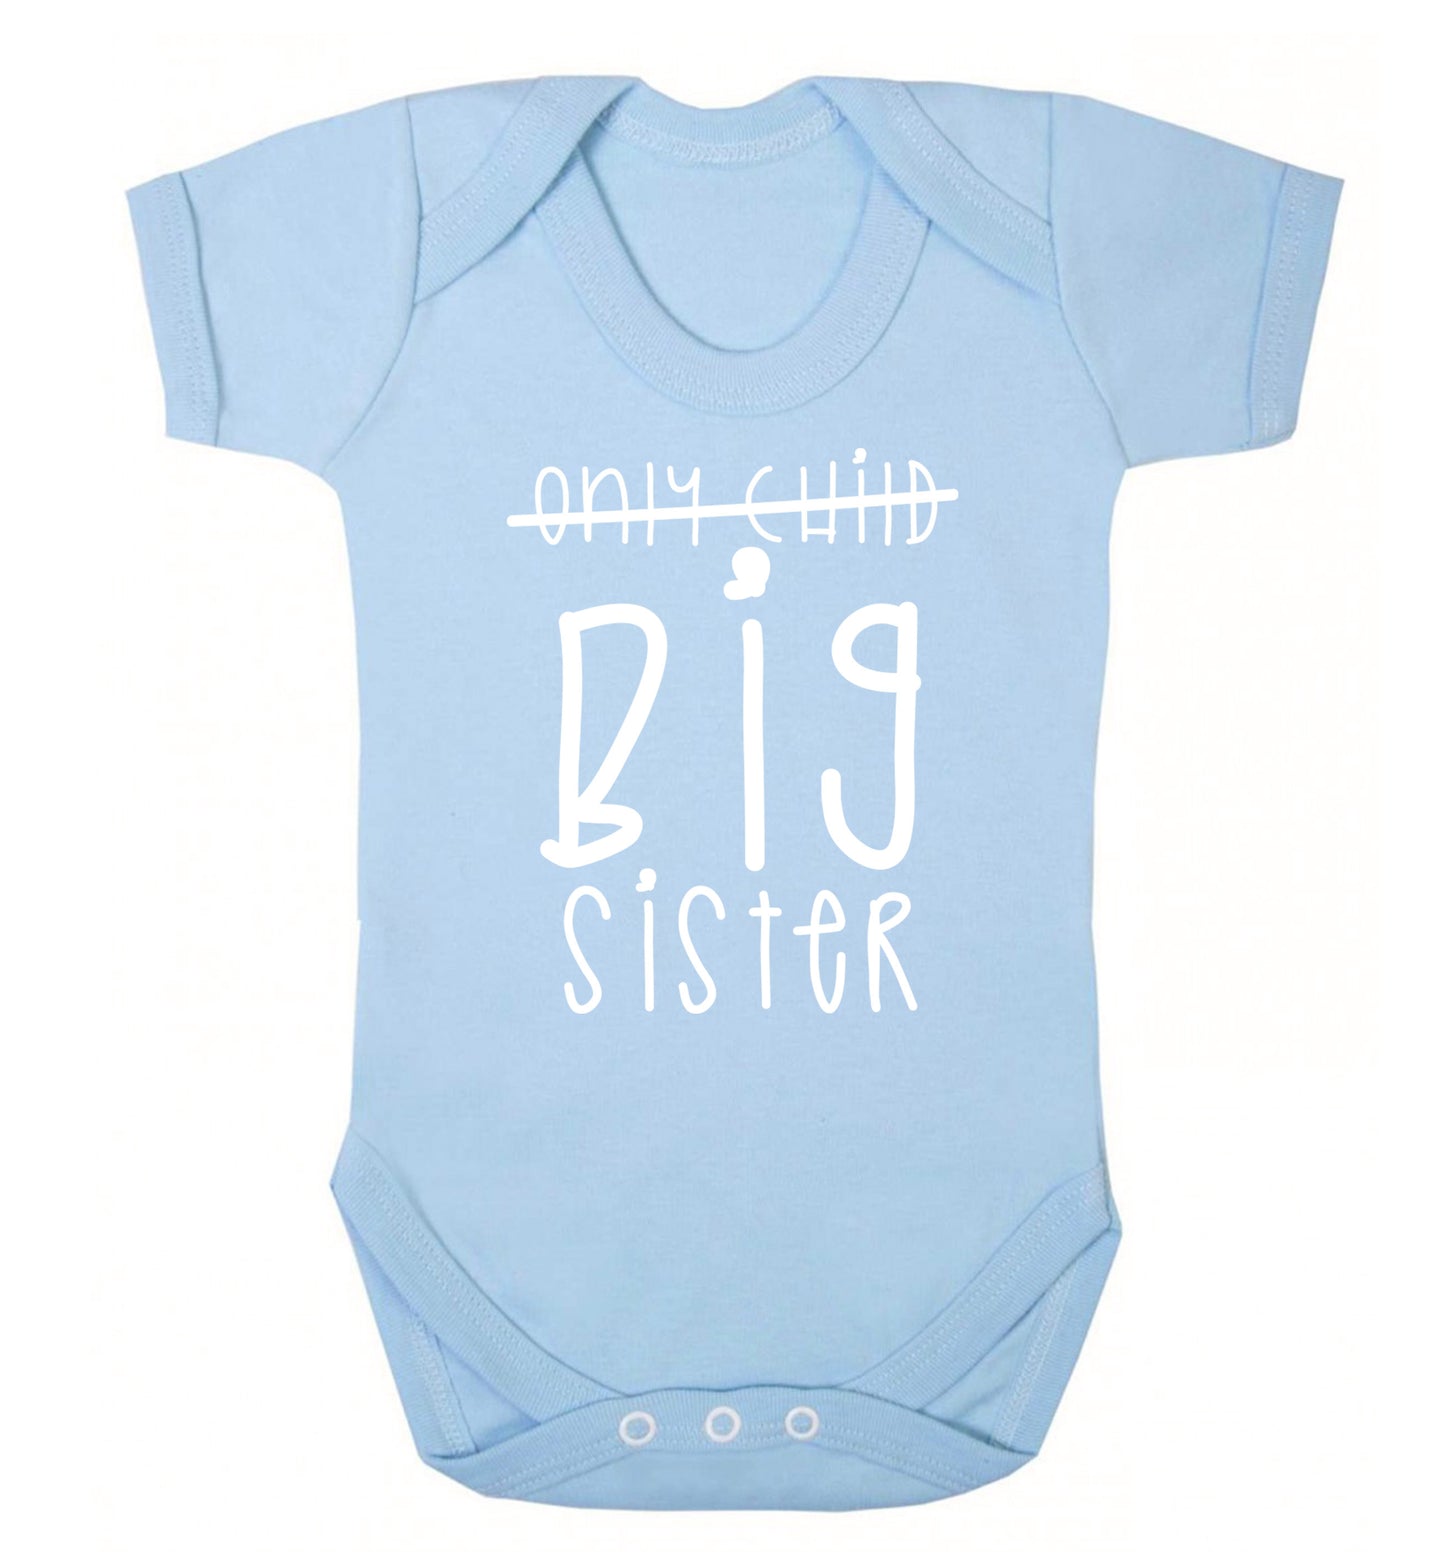 Only child big sister Baby Vest pale blue 18-24 months